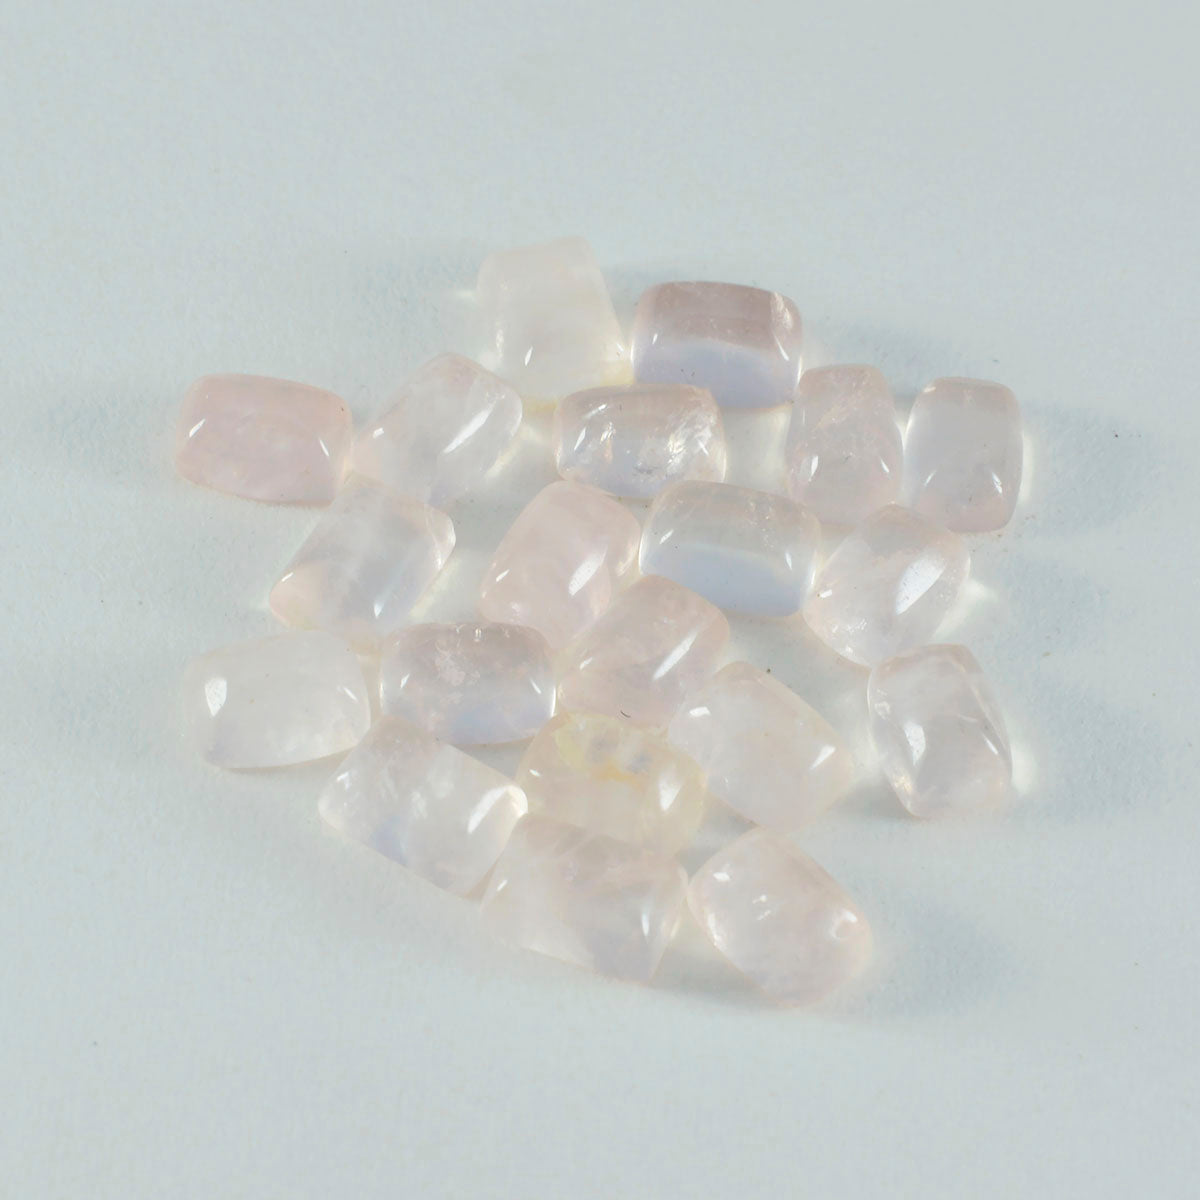 Riyogems 1PC Pink Rose Quartz Cabochon 7x9 mm Octagon Shape lovely Quality Loose Gemstone